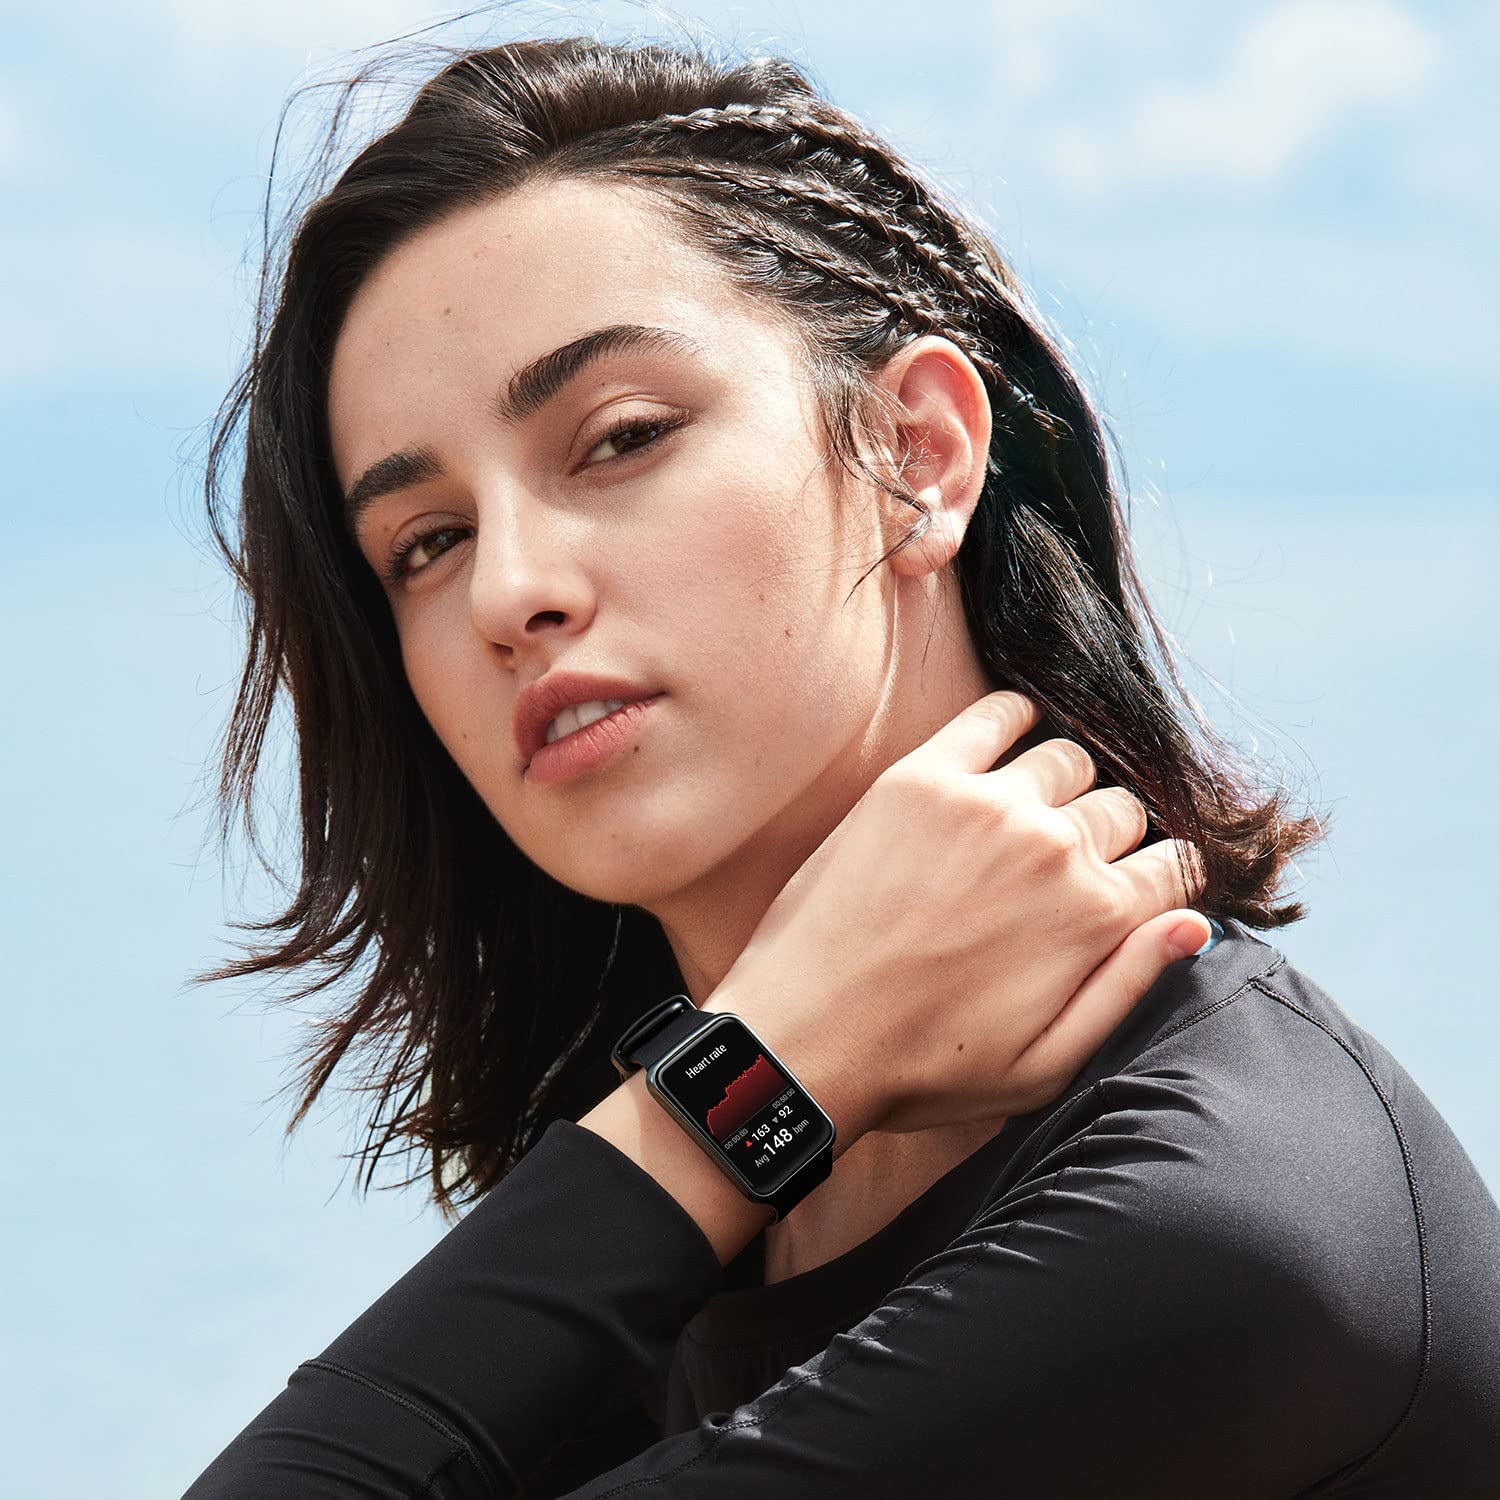 Huawei Watch Fit 46mm Smartwatch Oxygen Saturation Detection Graphite Black 7170